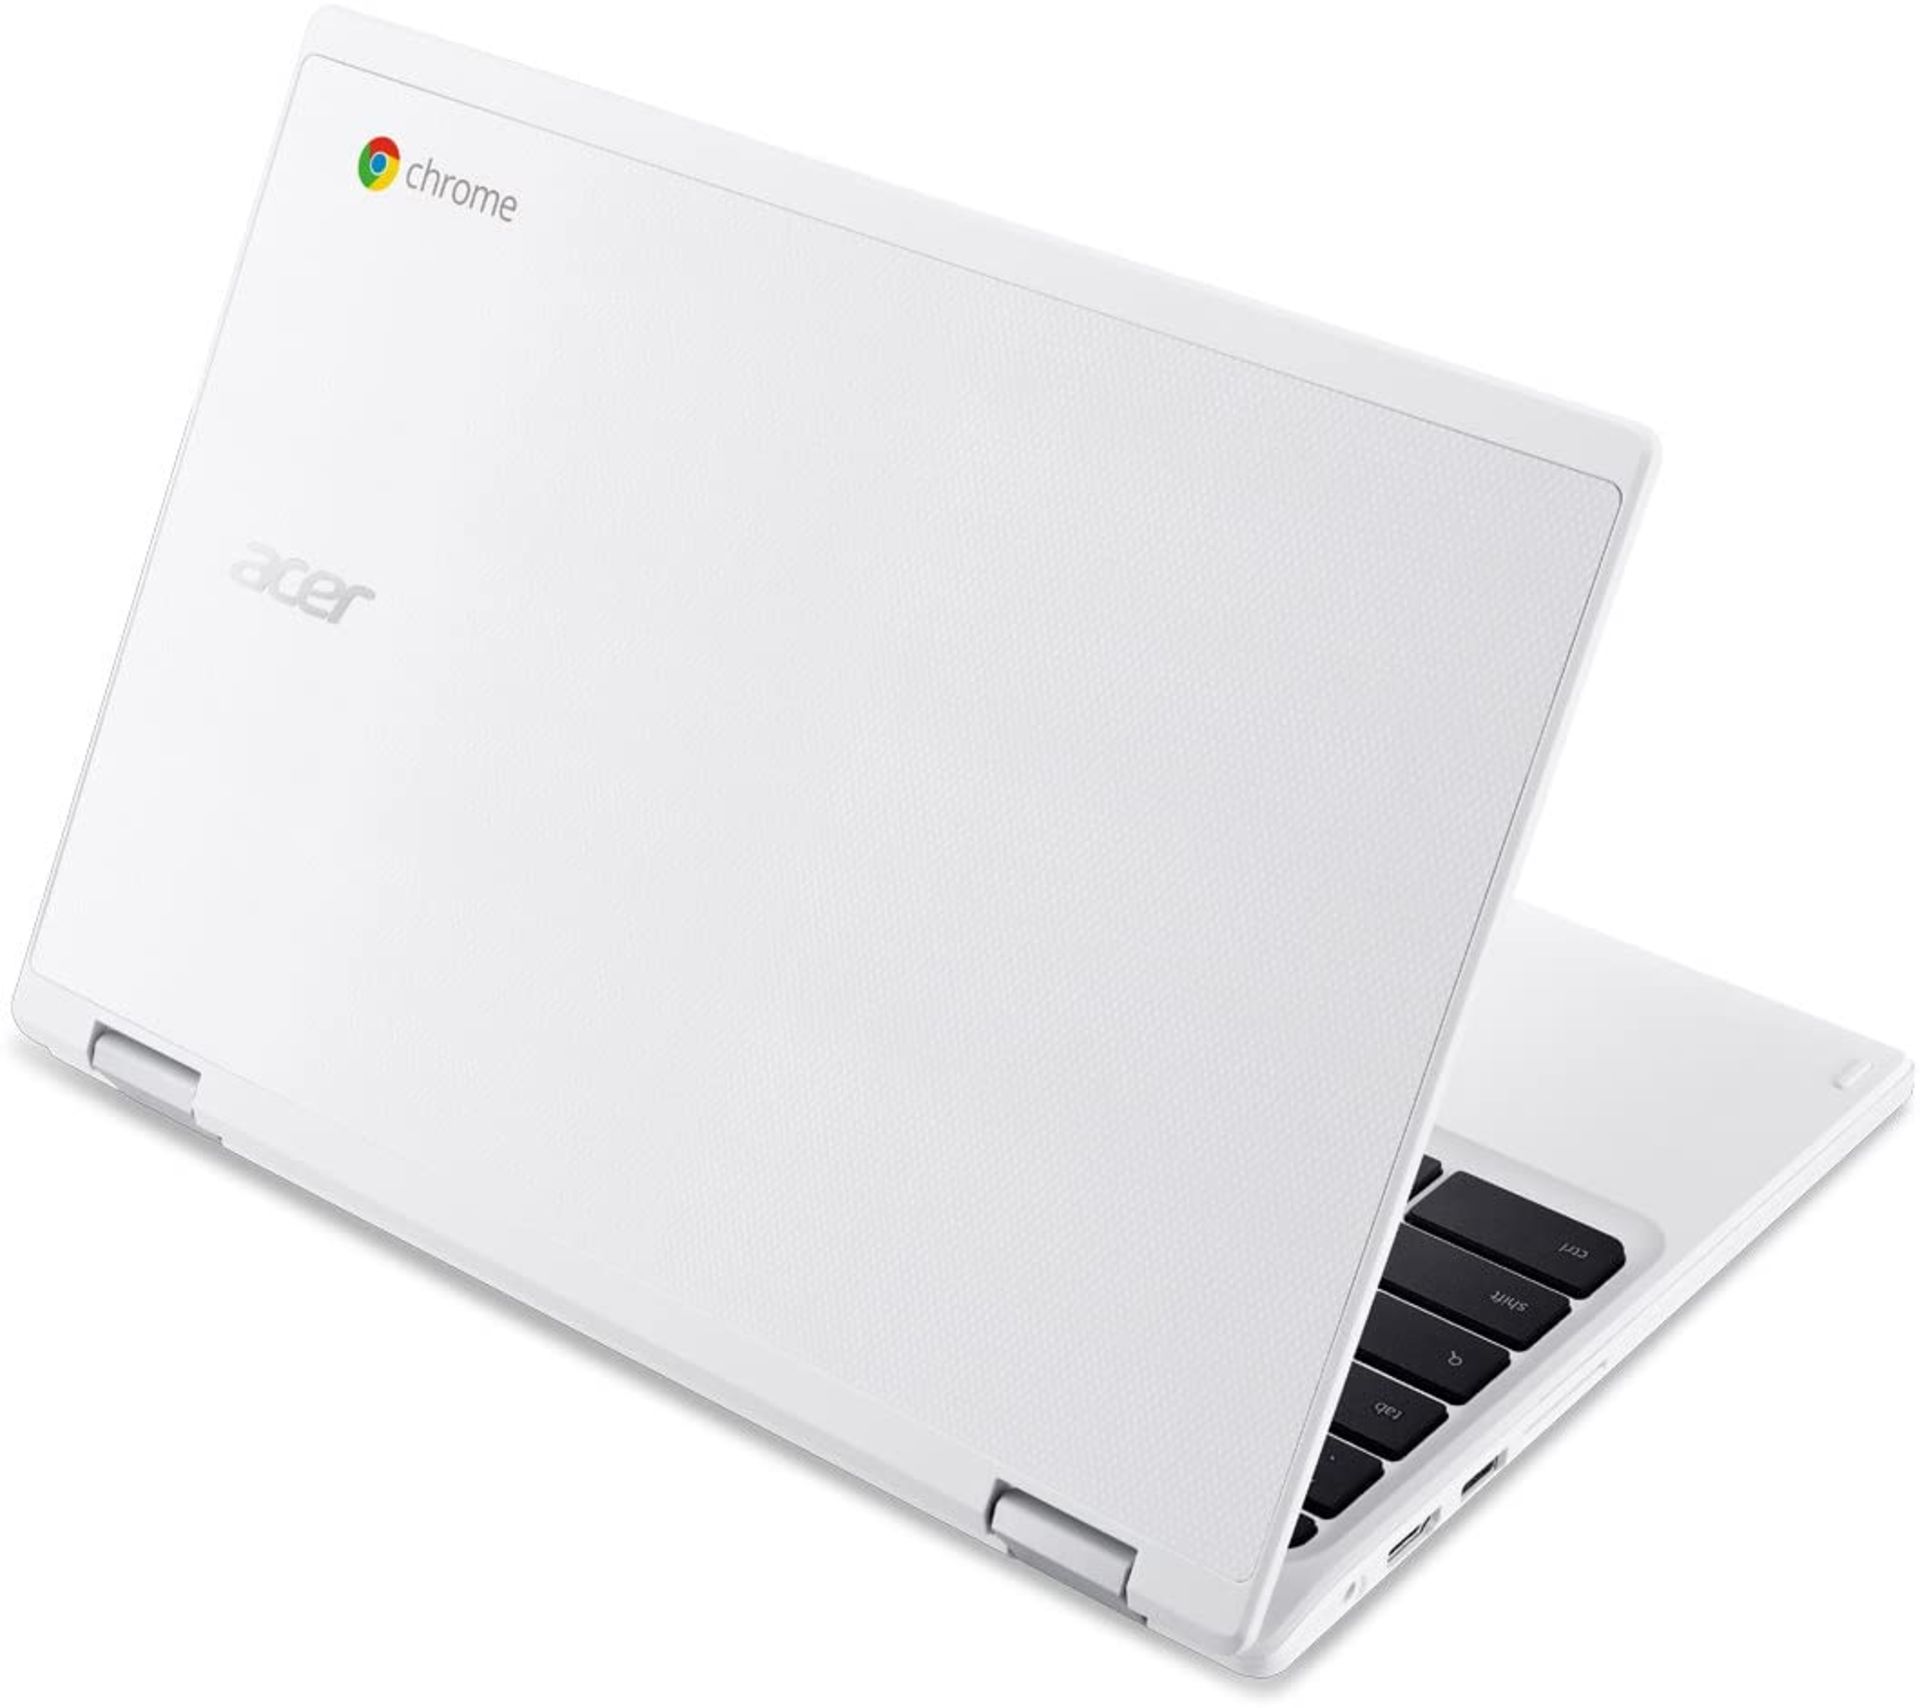 (M5) Acer Chromebook 11.6 inches Laptop CB3-131 Intel Celeron N2840 2 GB 16GB EMMC Chrome White... - Image 4 of 4